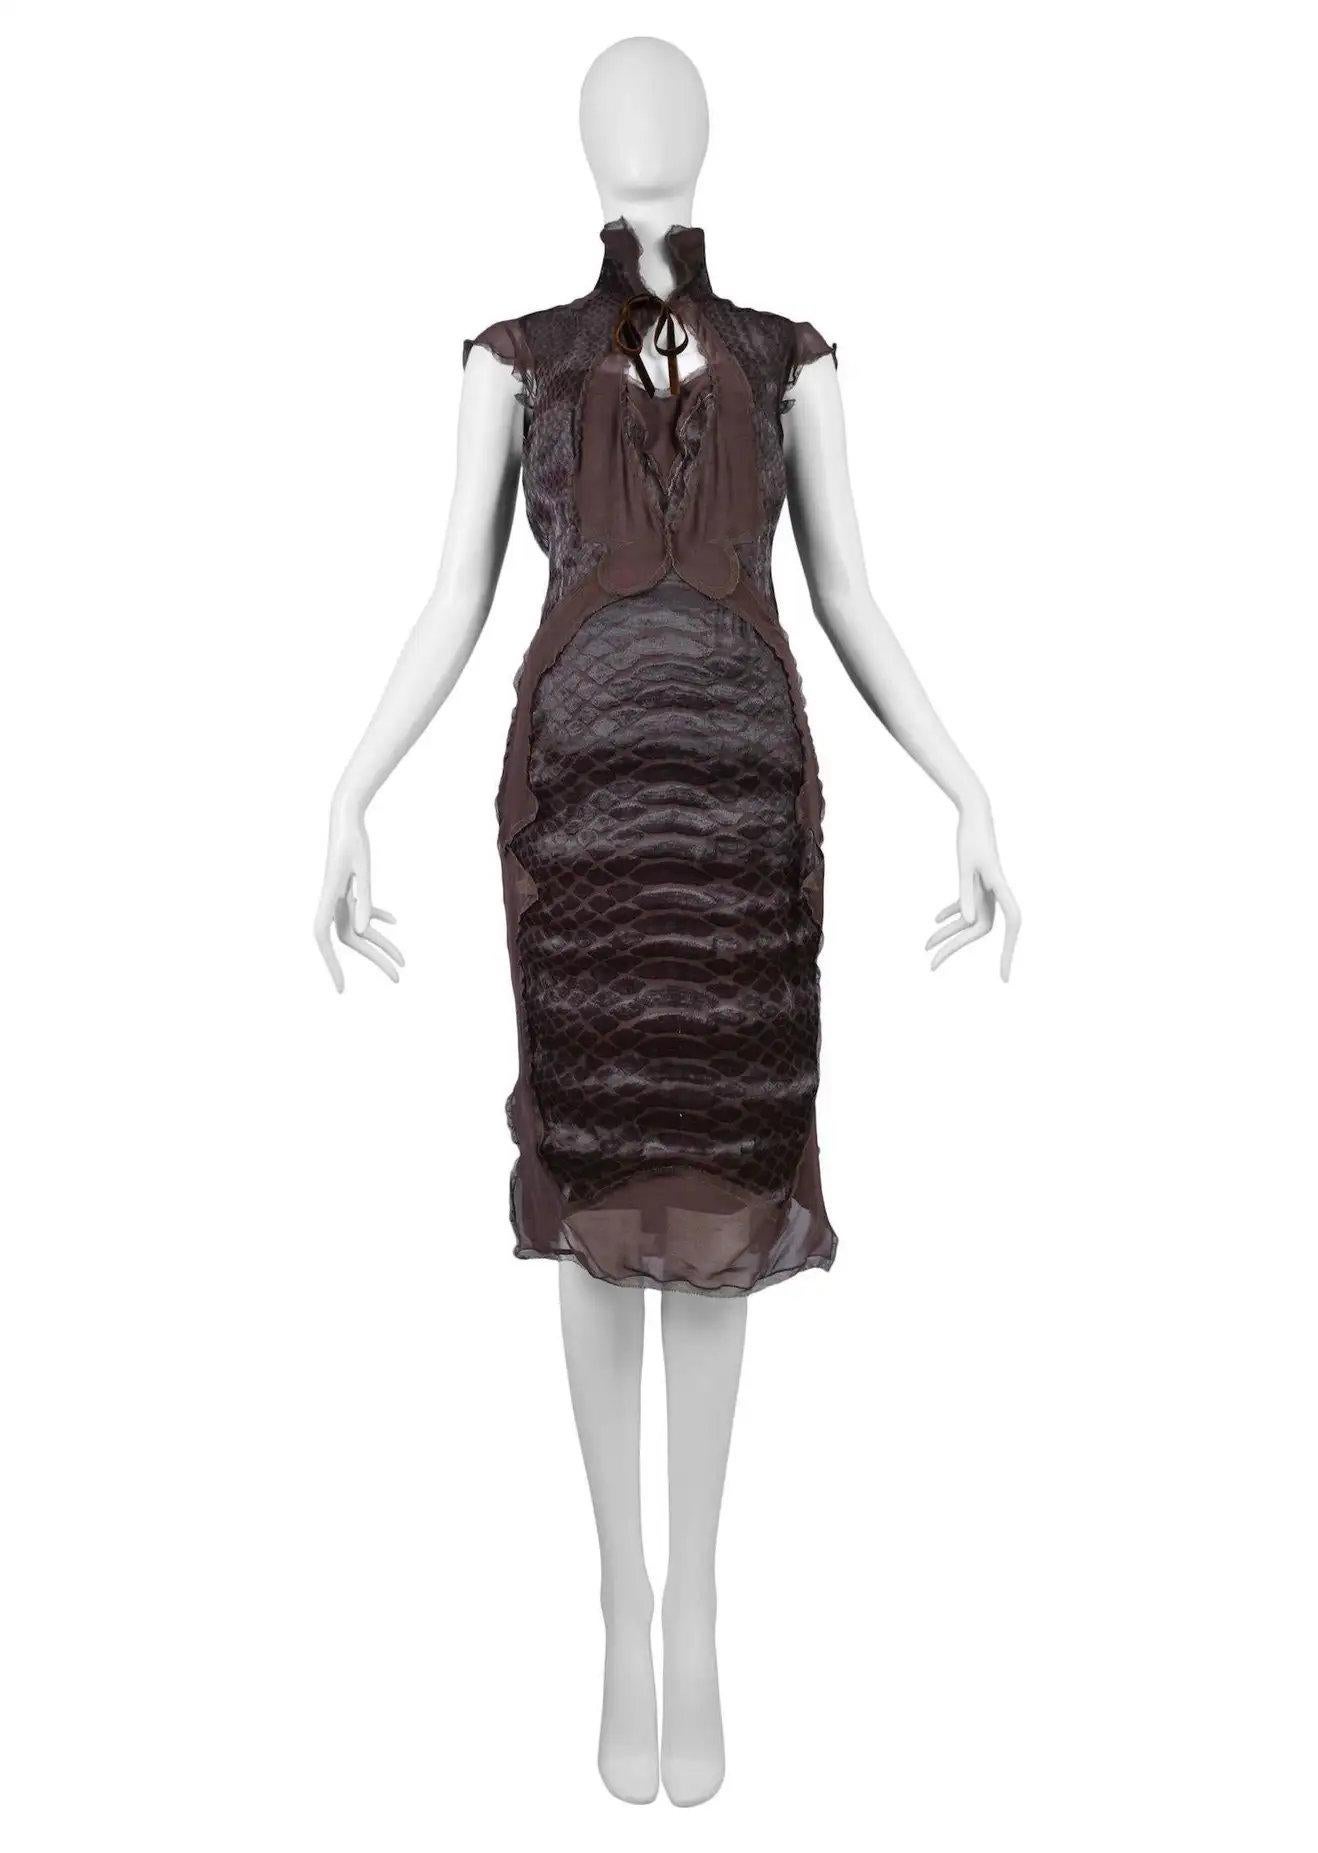 Women's Vintage Tom Ford for Yves Saint Laurent Chocolate Dress, c. 2004